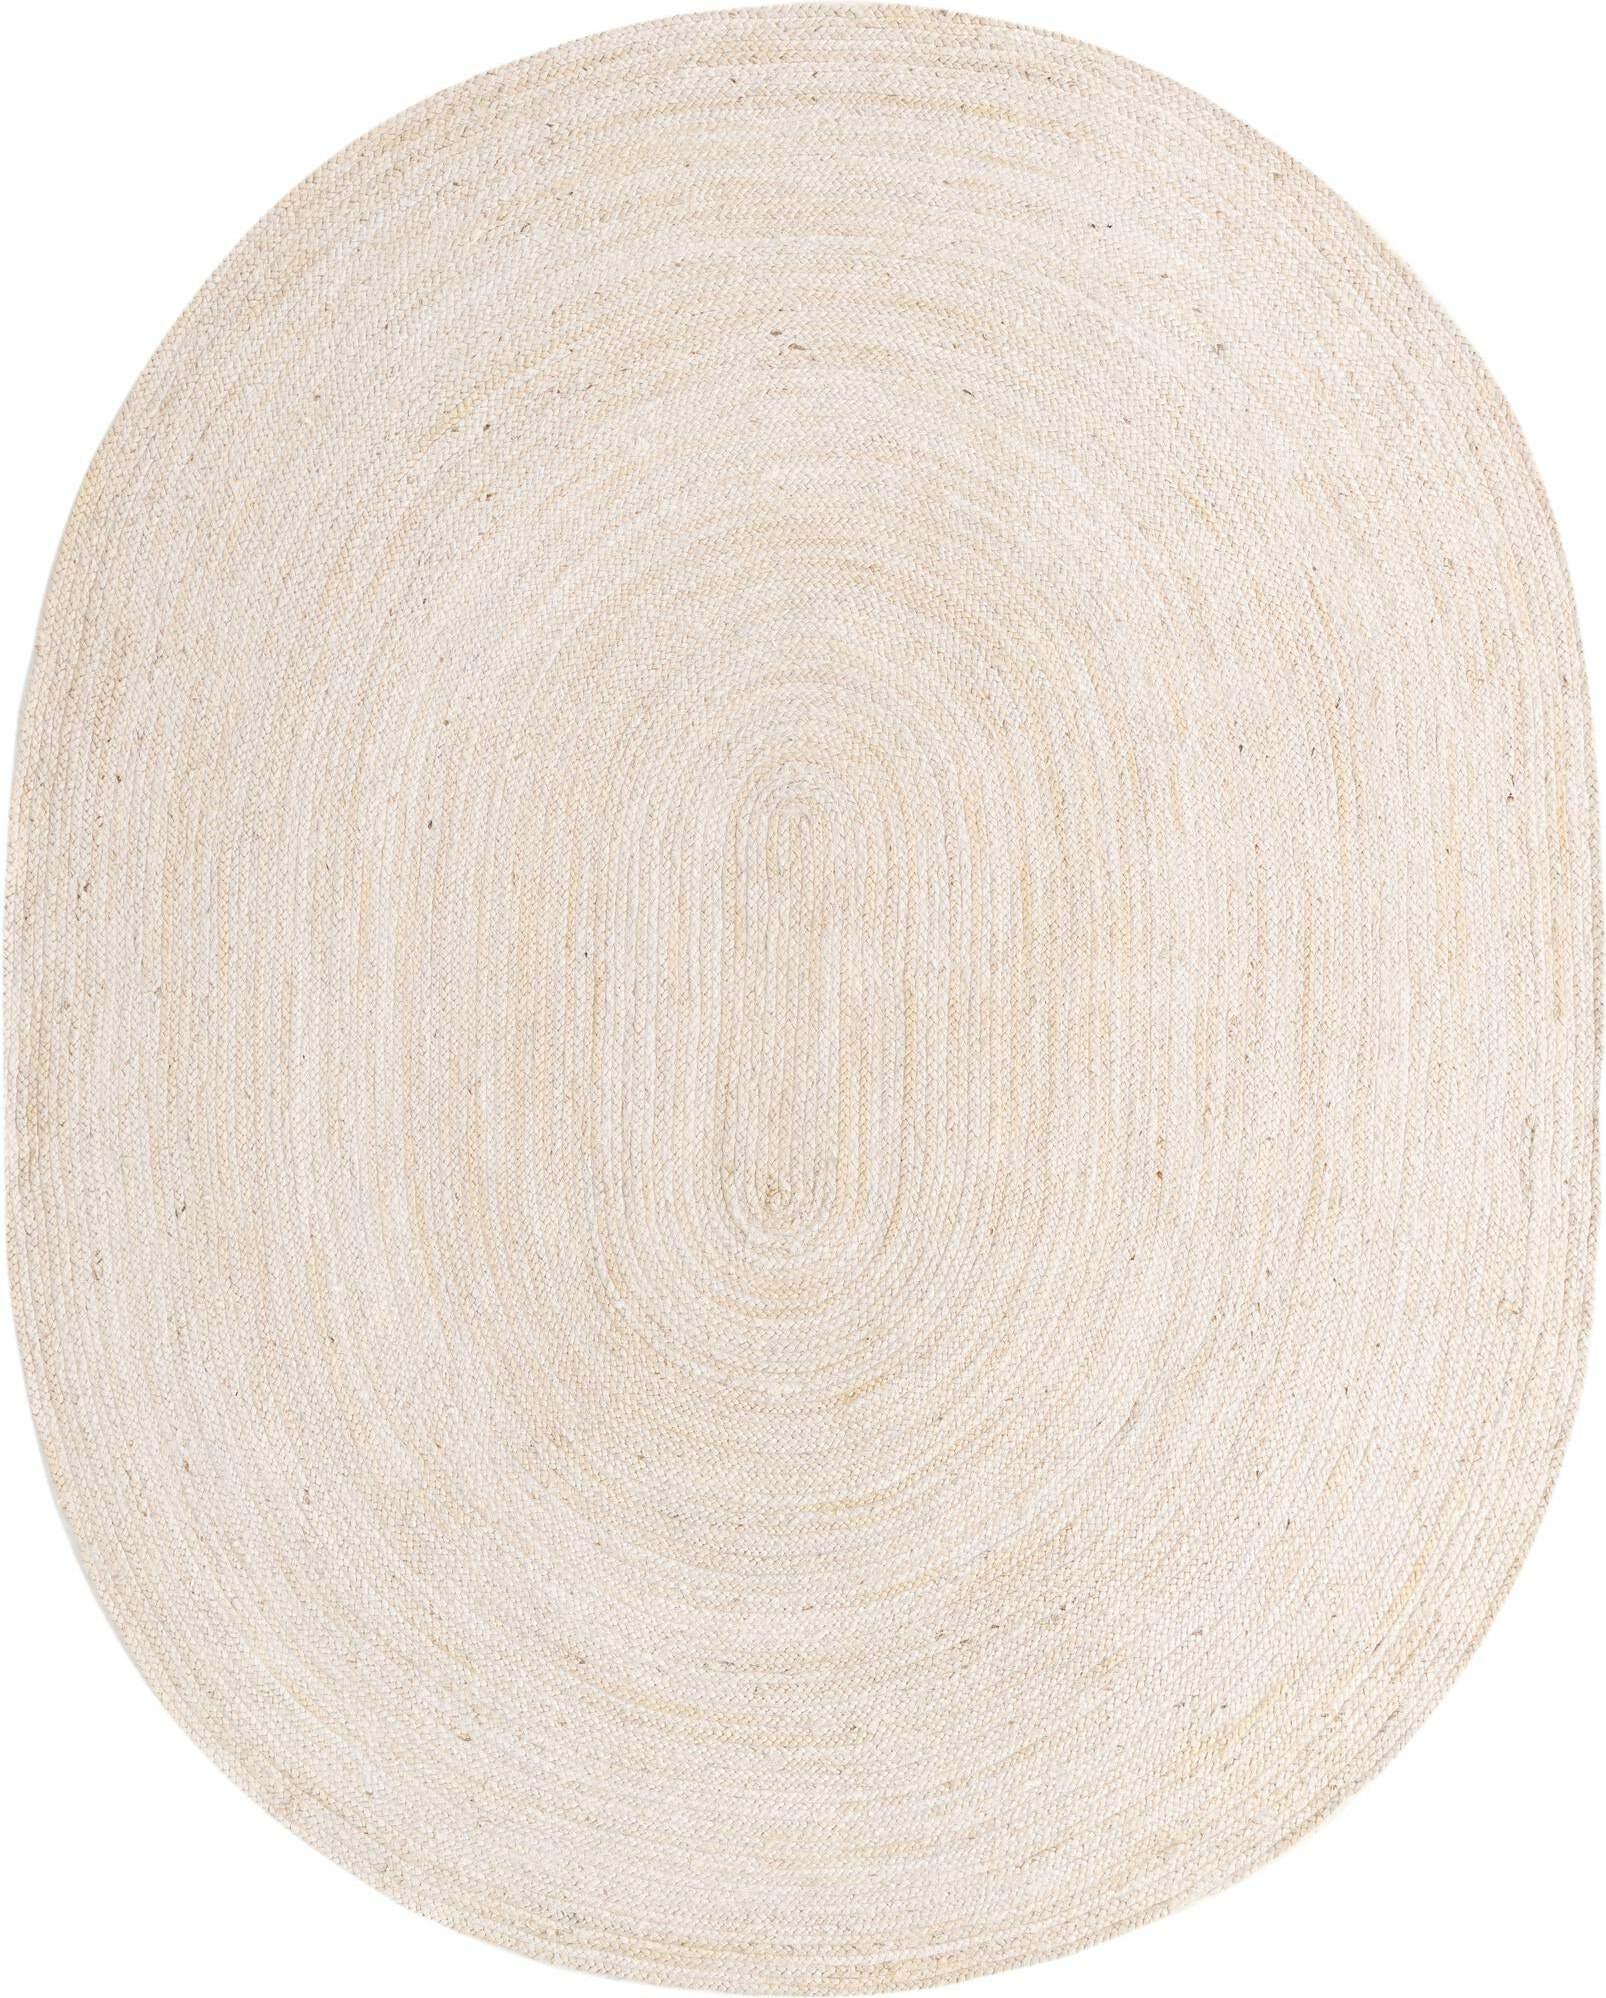 Handwoven Jute & Cotton Oval Rug Natural Fibers Braided Reversible Carpet  4x6ft